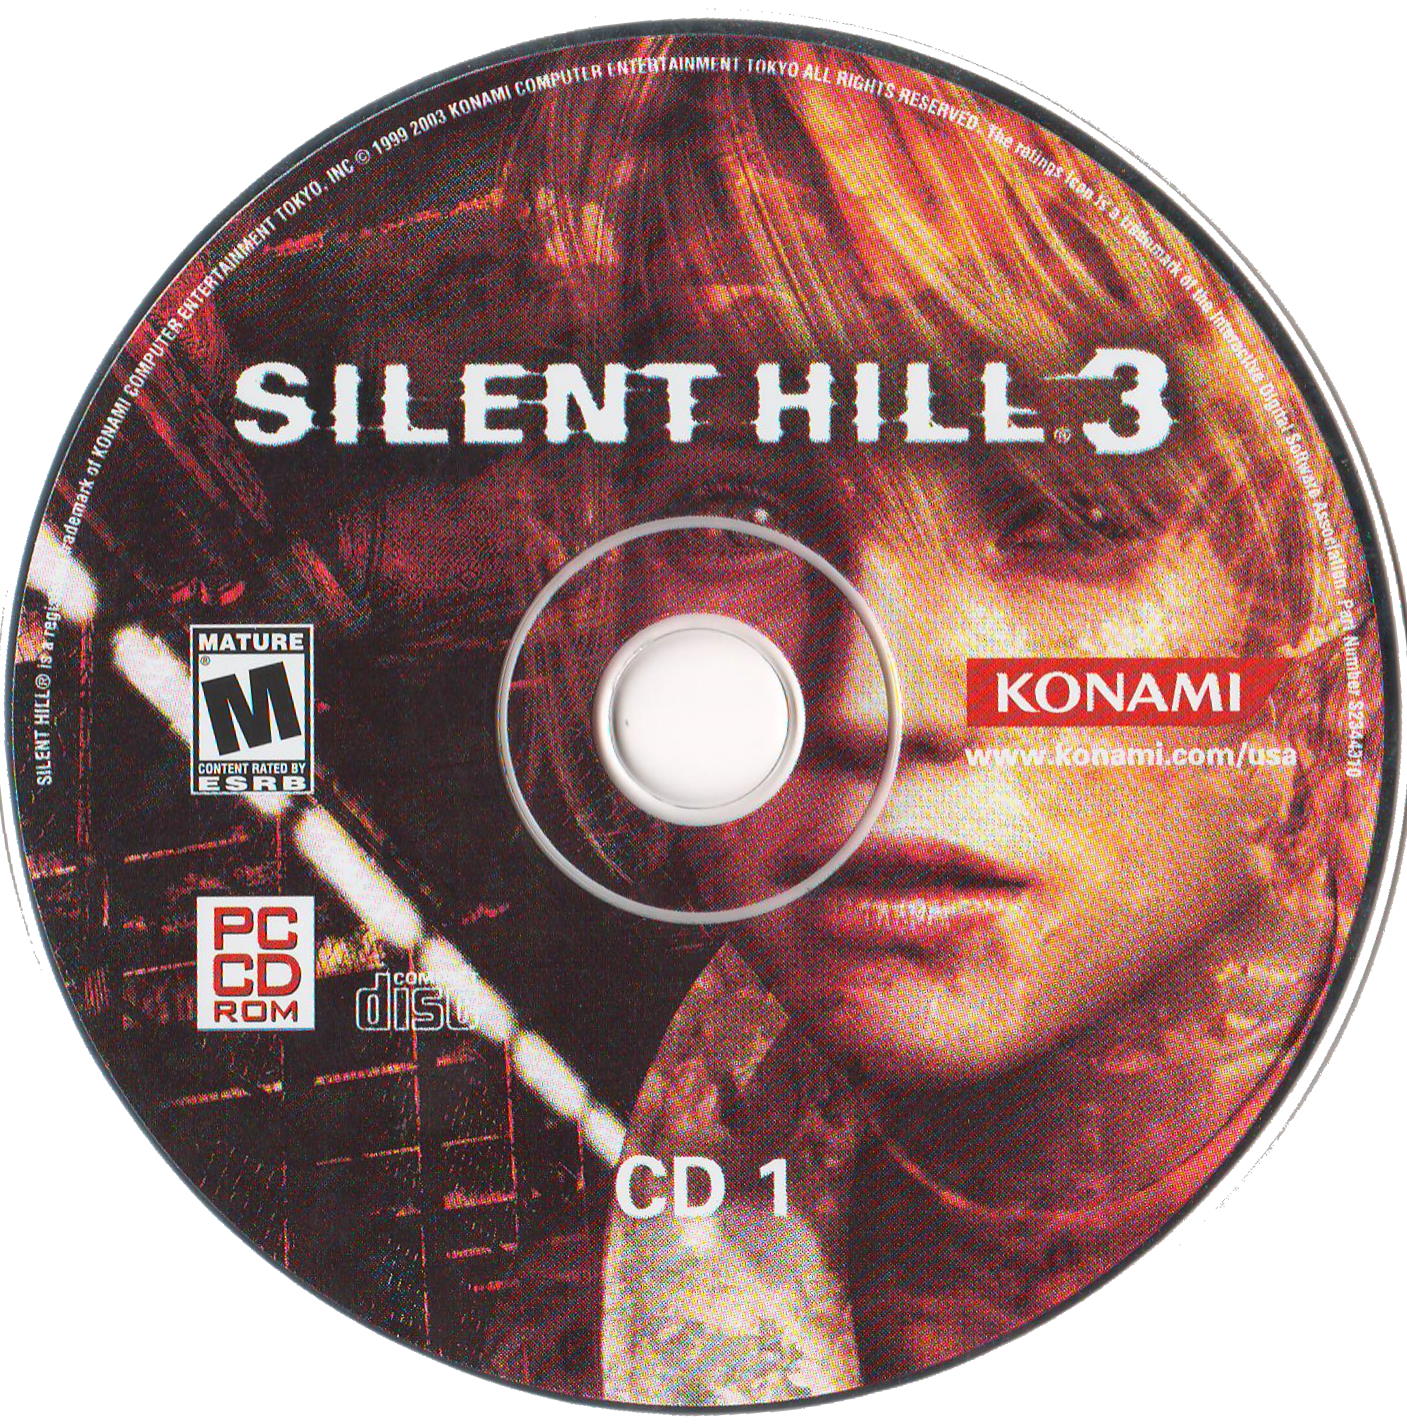 Сайлент хилл перевод. Обложка диска Silent Hill 3 ps2. Silent Hill ps1 Disk. Silent Hill 1 ps1 диск.